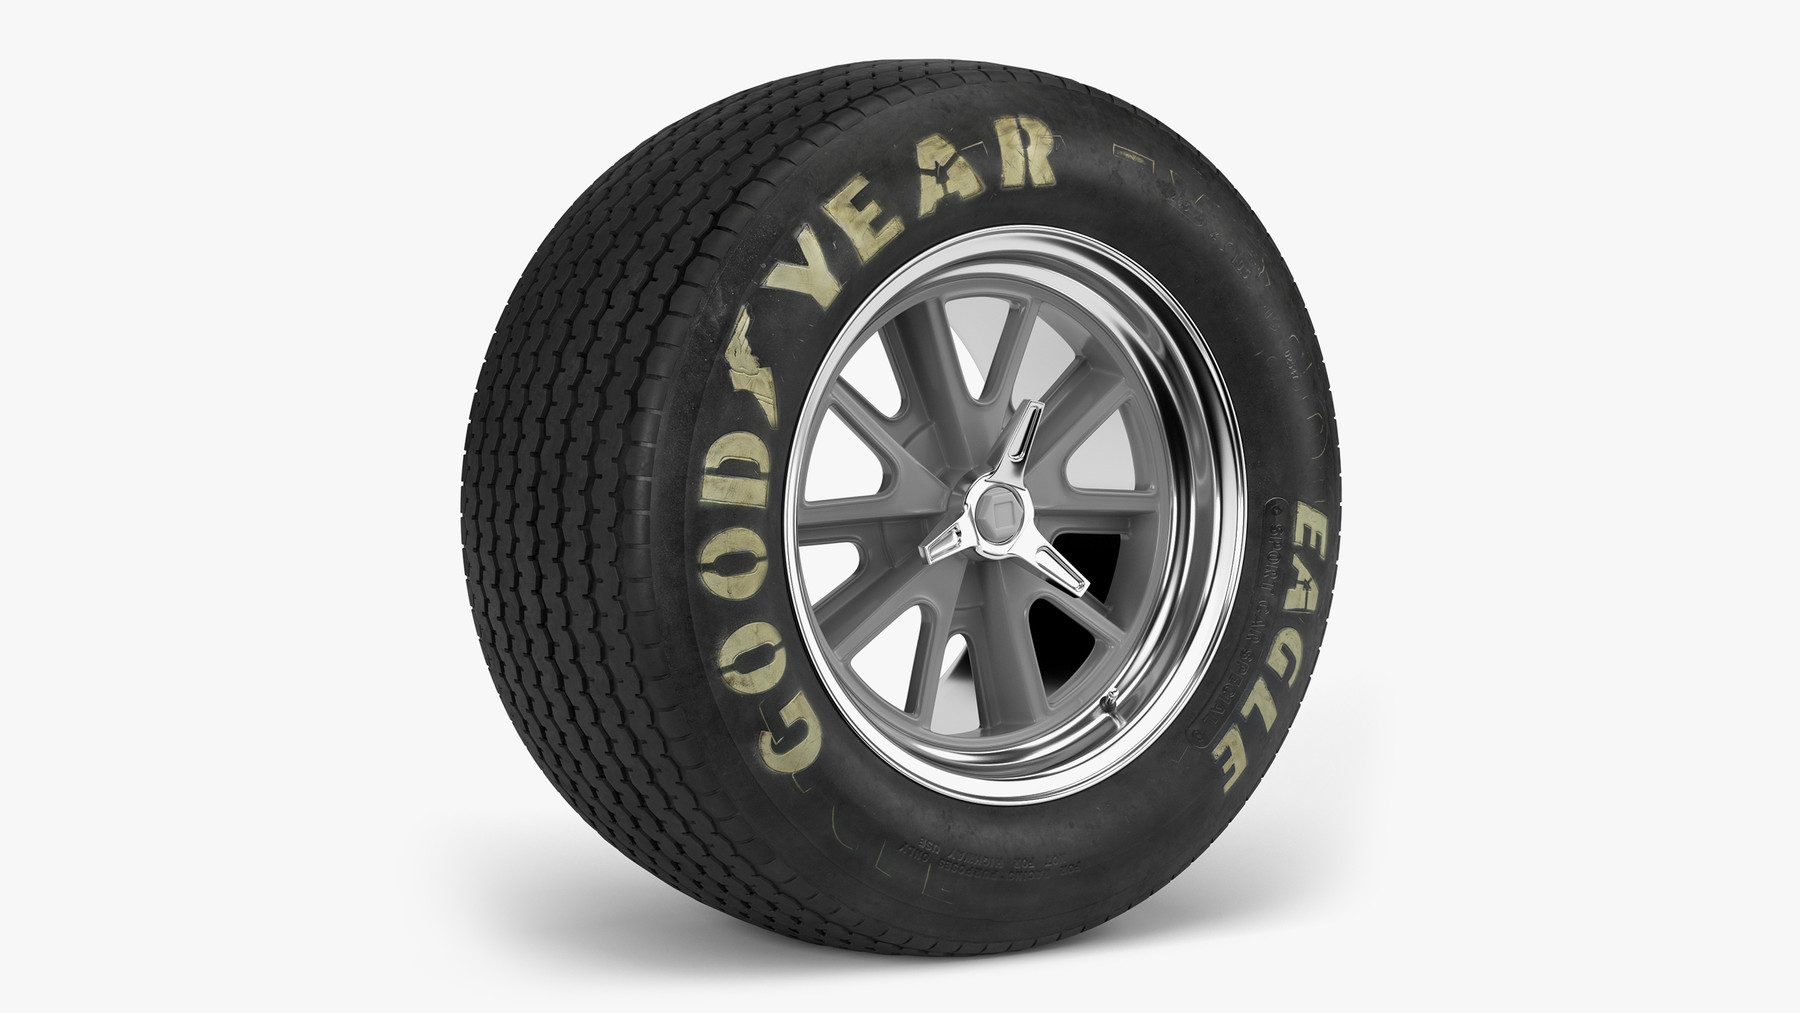 Goodyear Billboard Tire American Racing Heritage Wheel (15 x 10-inch) Highl...